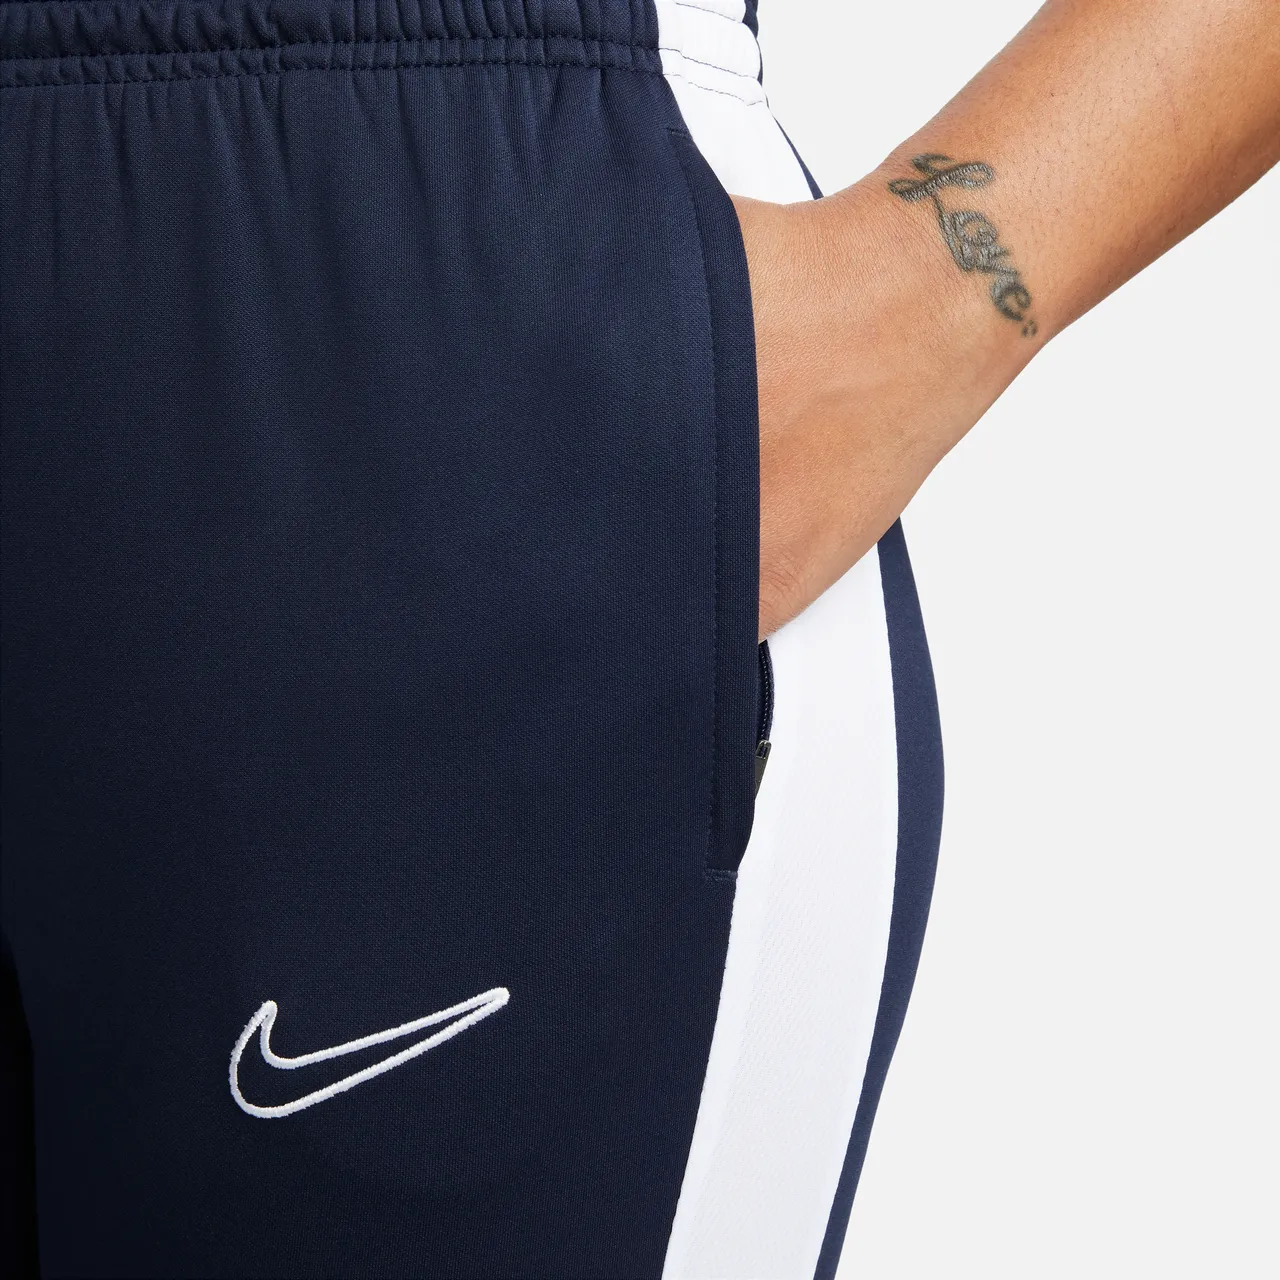 Nike Dri-FIT Academy Women's Football Pants - Blue - Polyester